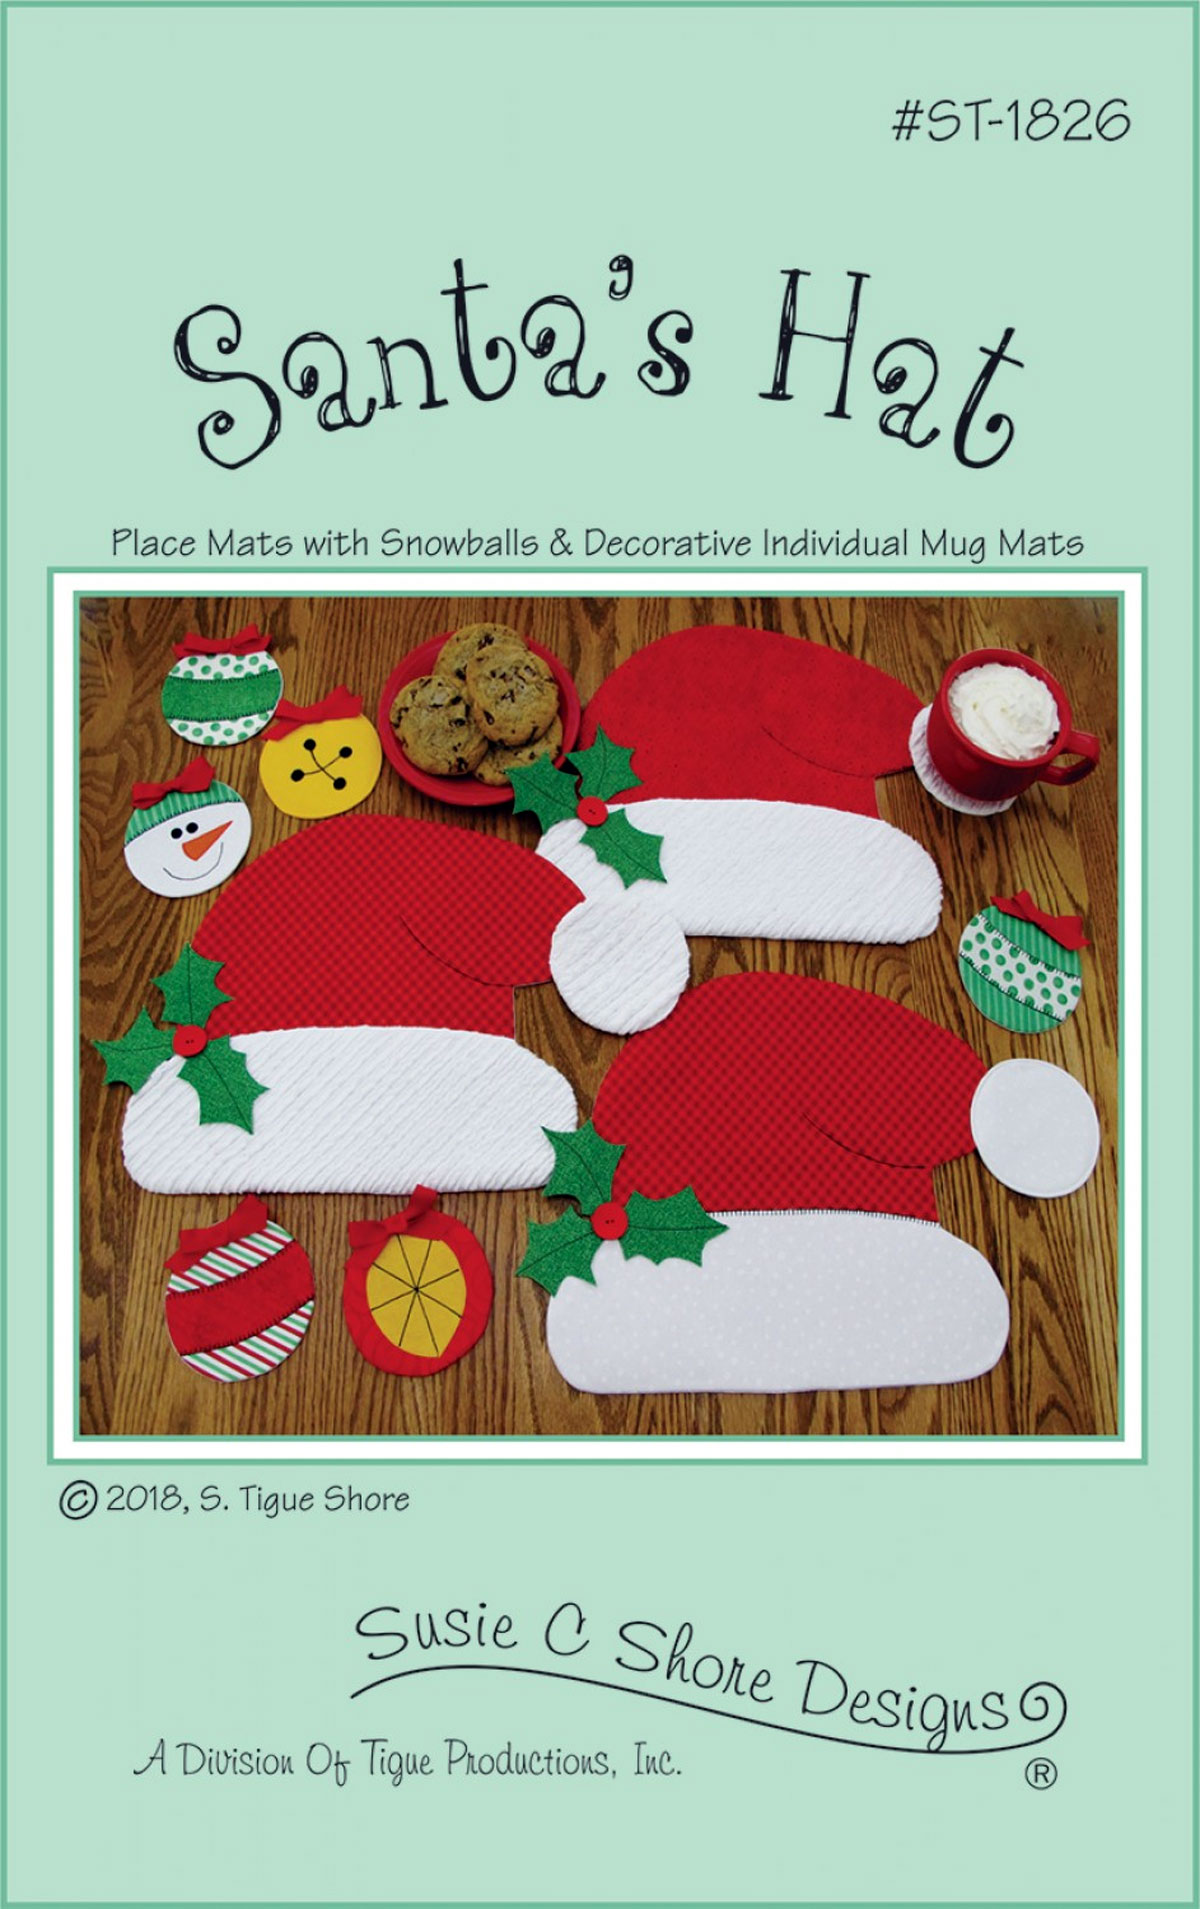 Santas-Hat-sewing-pattern-Susie-C-Shore-front